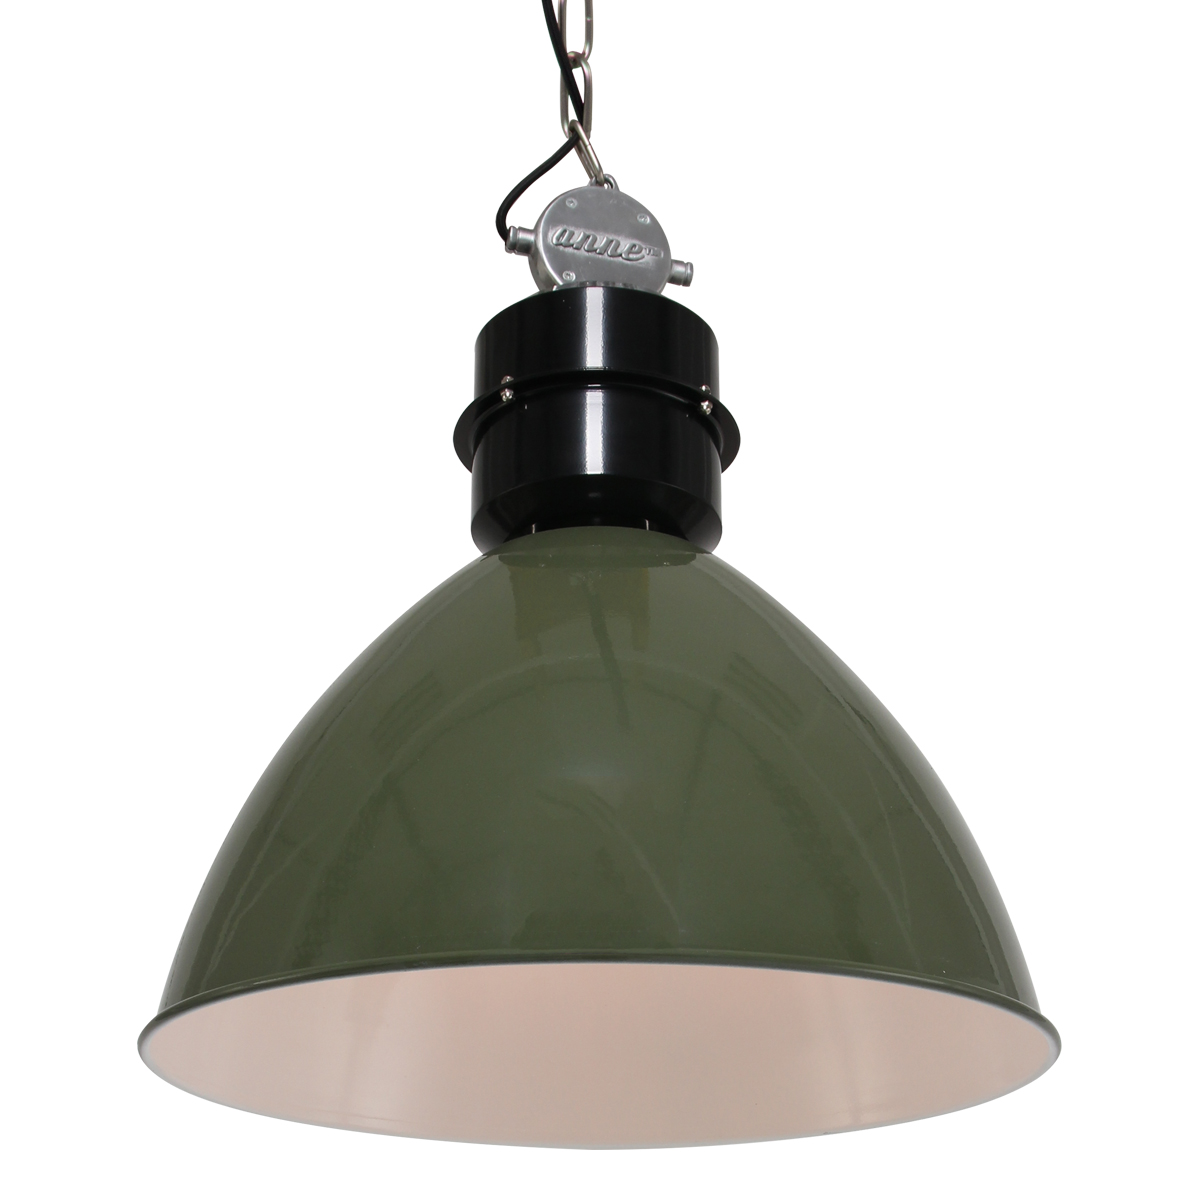 ik ga akkoord met Briljant samenkomen Groene industriële hanglamp ø50 cm Frisk - online hanglampen